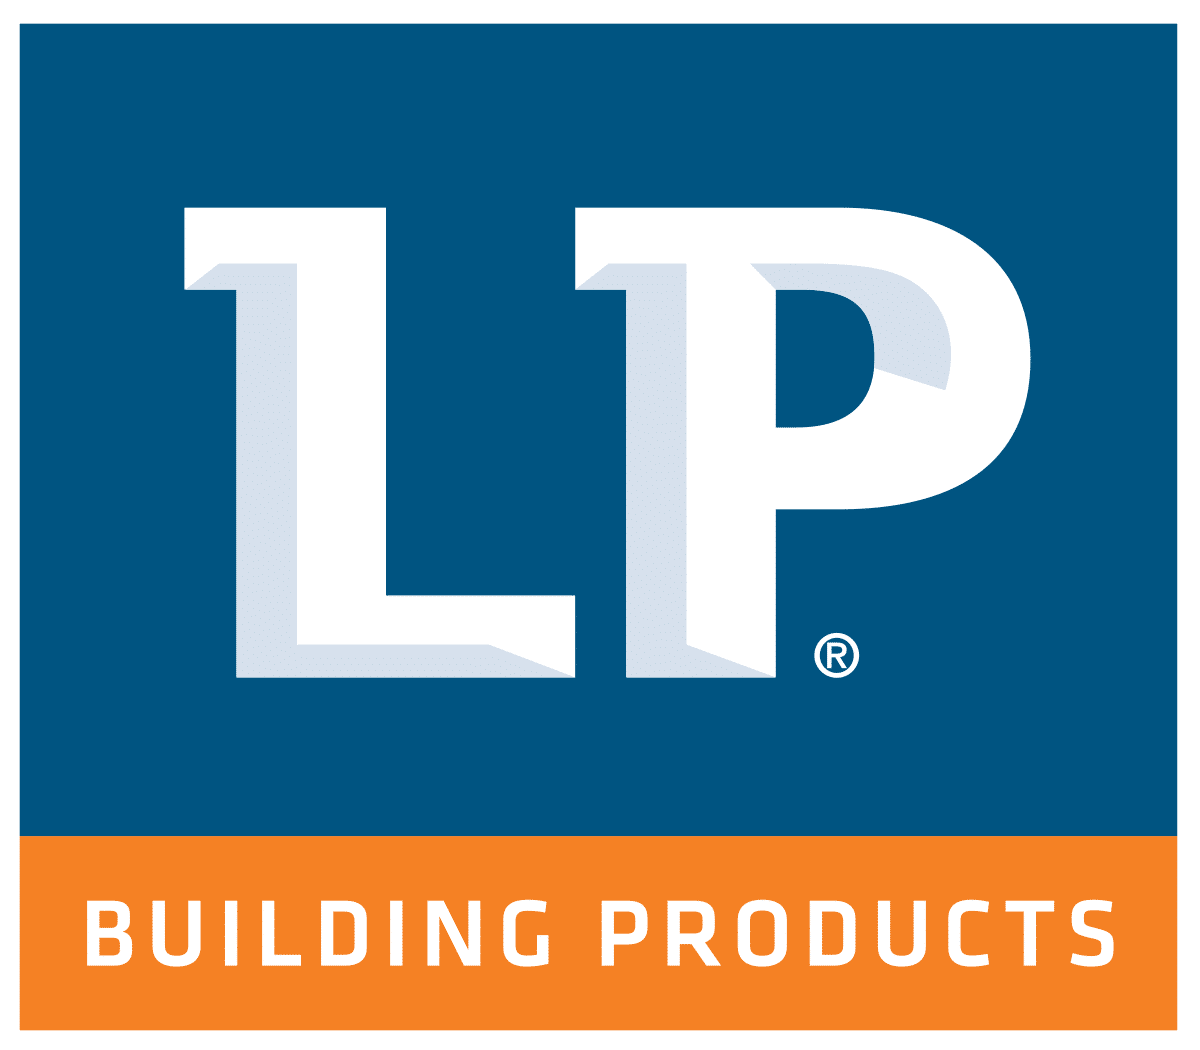 LP Smart Side Logo